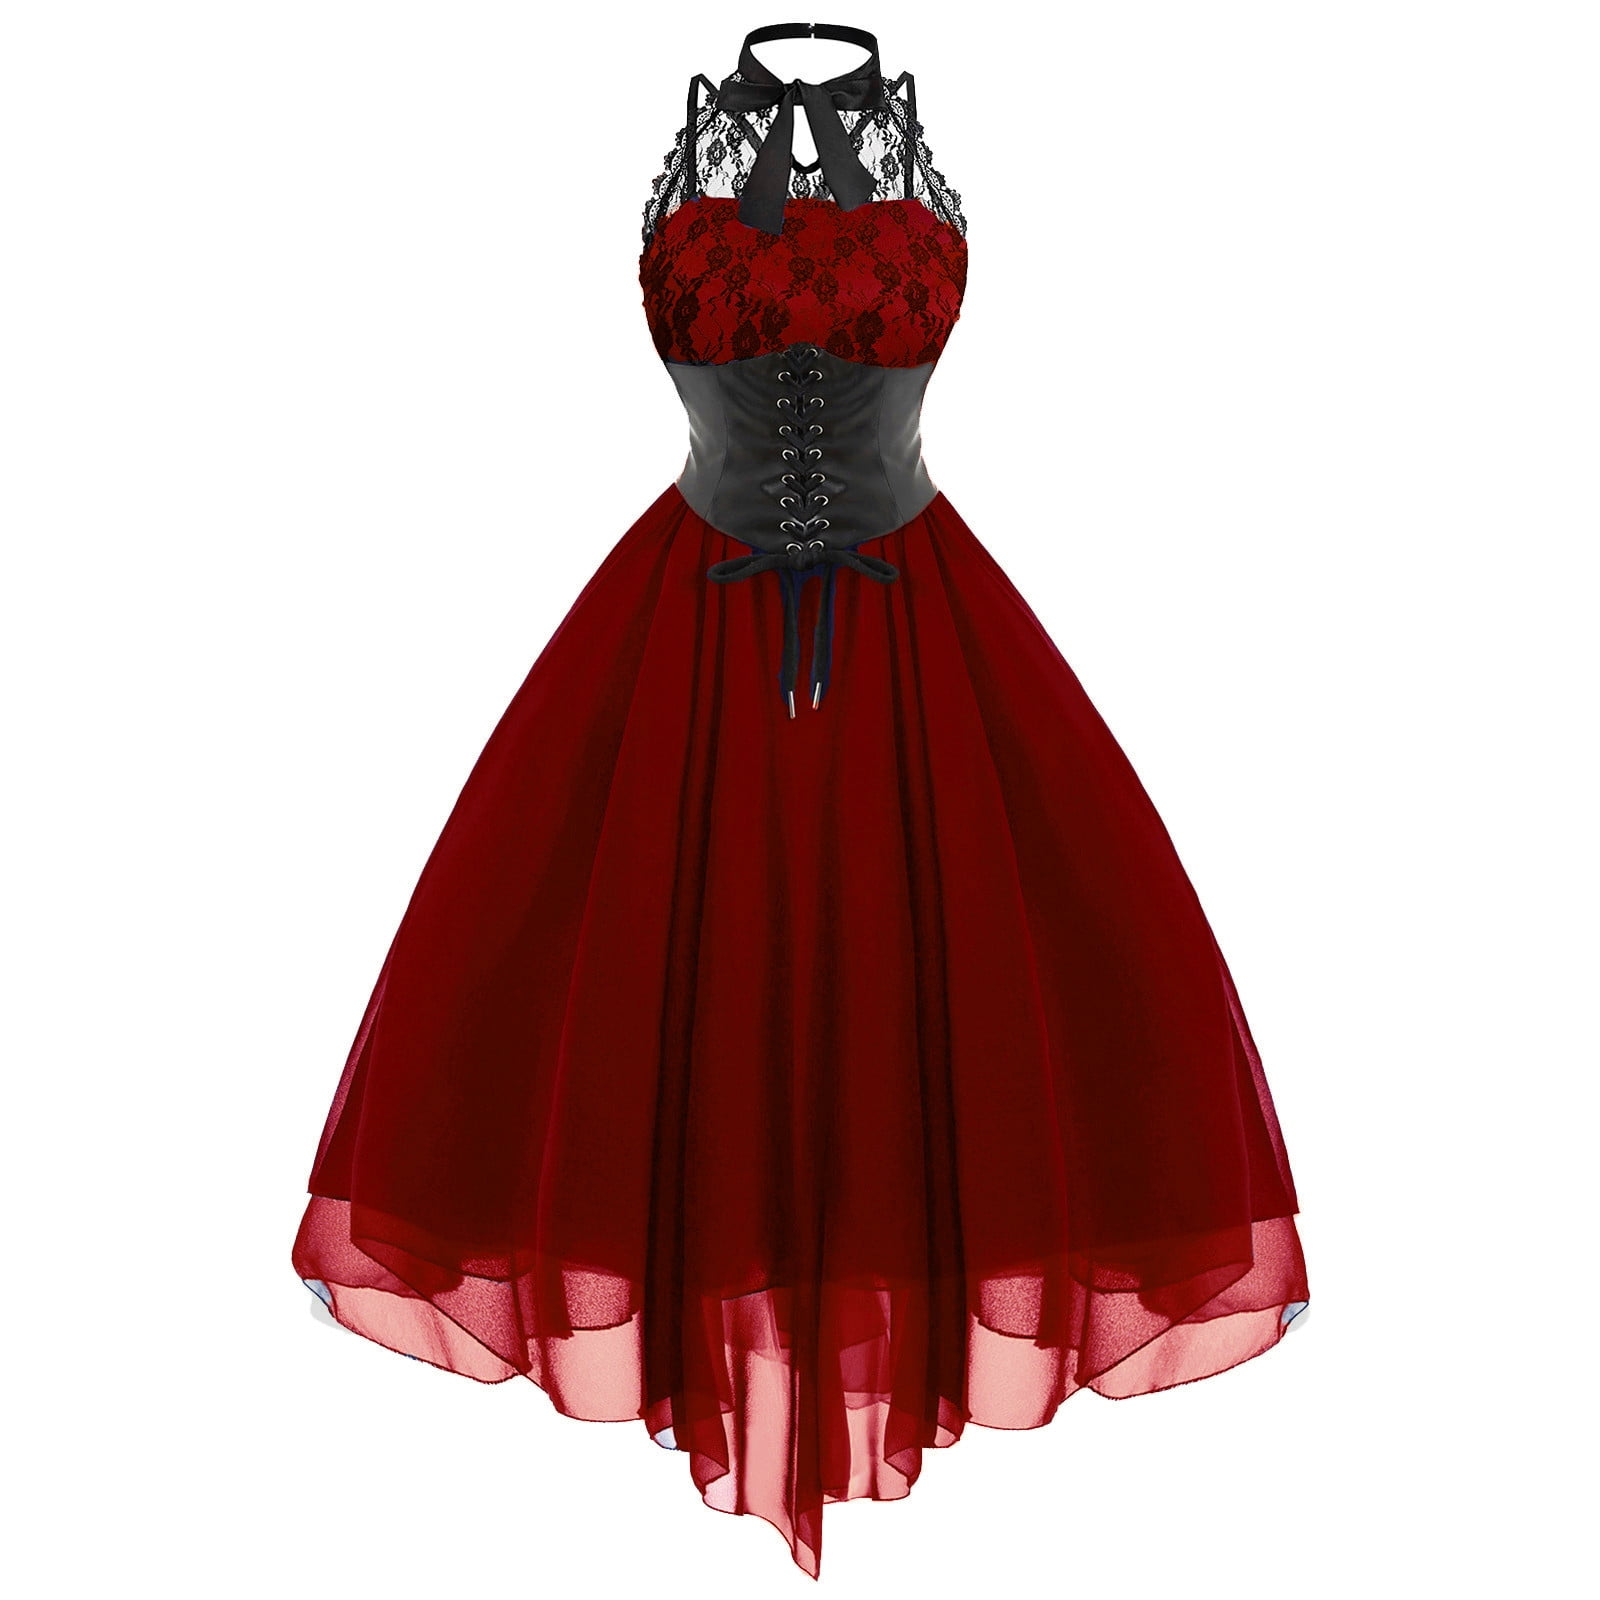 Tejiojio Women Clothes Clearance Fashion Womenl Vintage Gothic Court Gown  Cake Skirt Lace Clashing Dress - Walmart.com